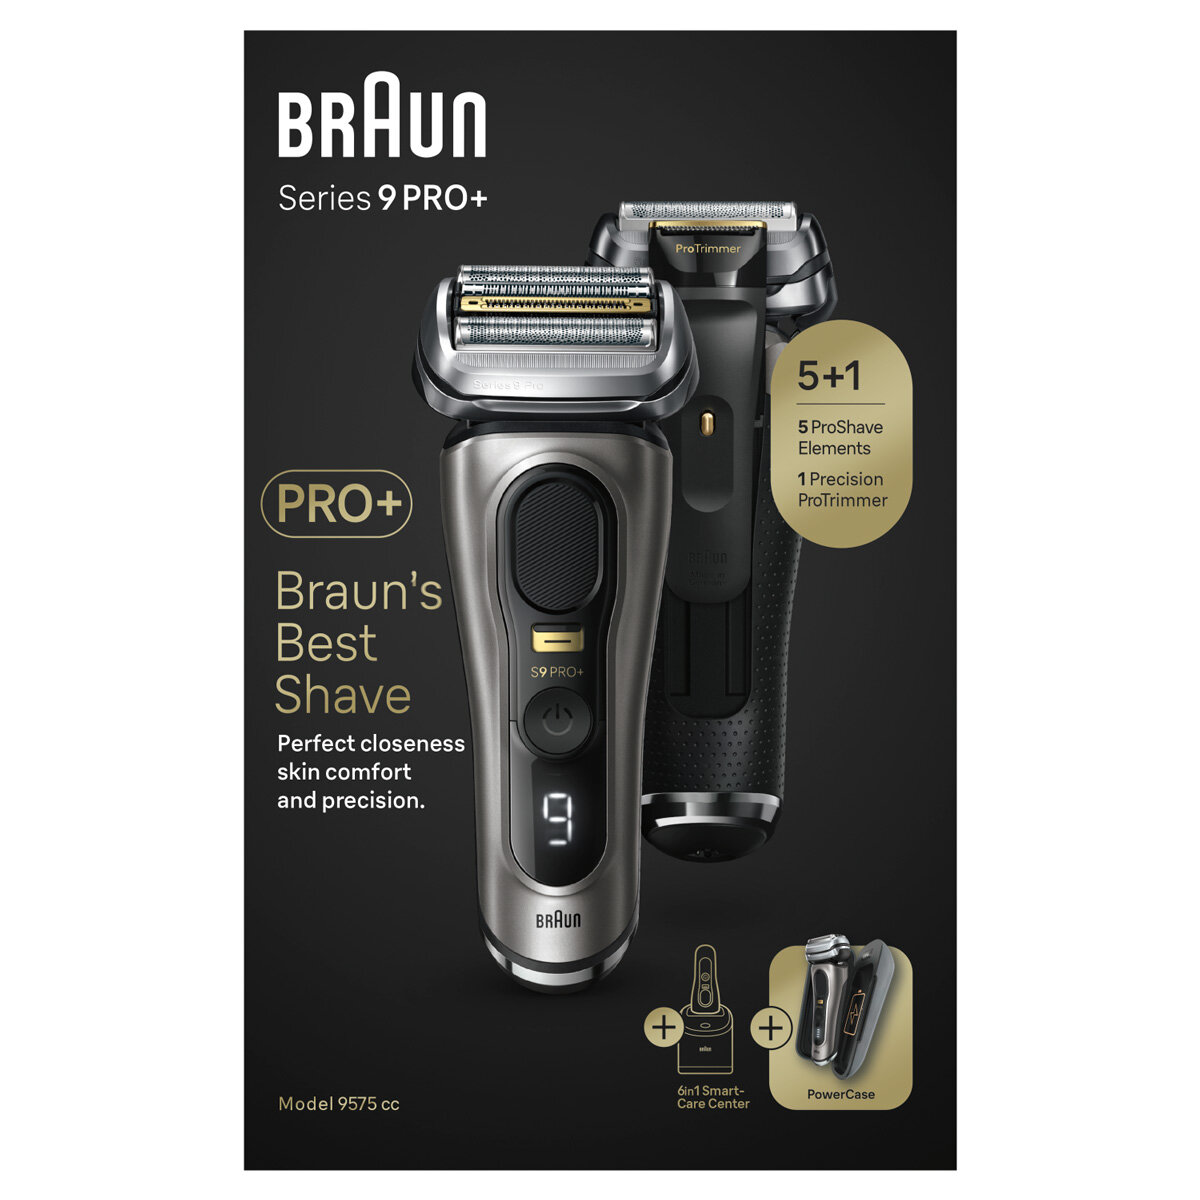 Image of Braun shaver box